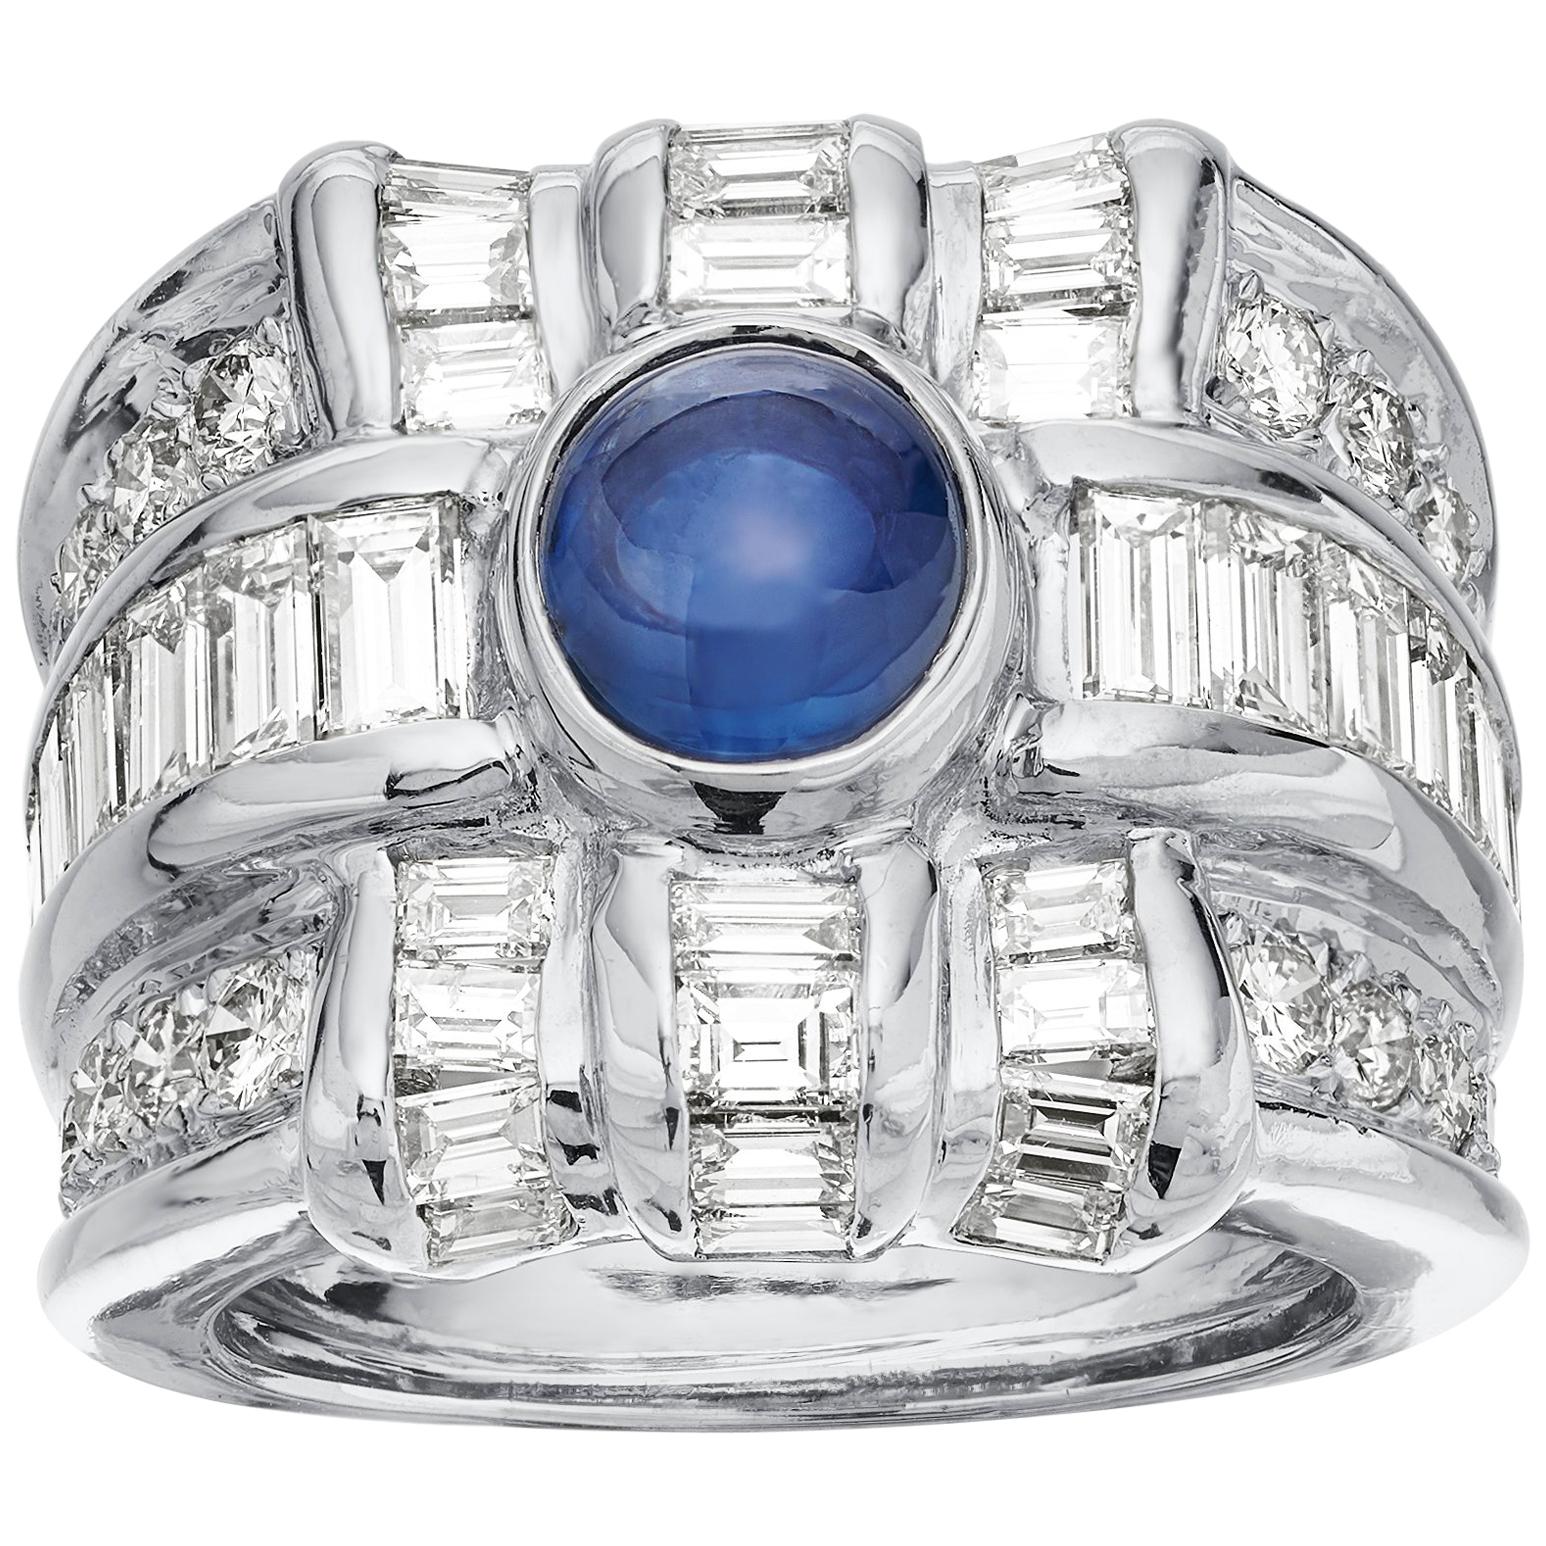 Diamond & Sapphire 18K White Gold Ring - A Dramatic Statement Piece